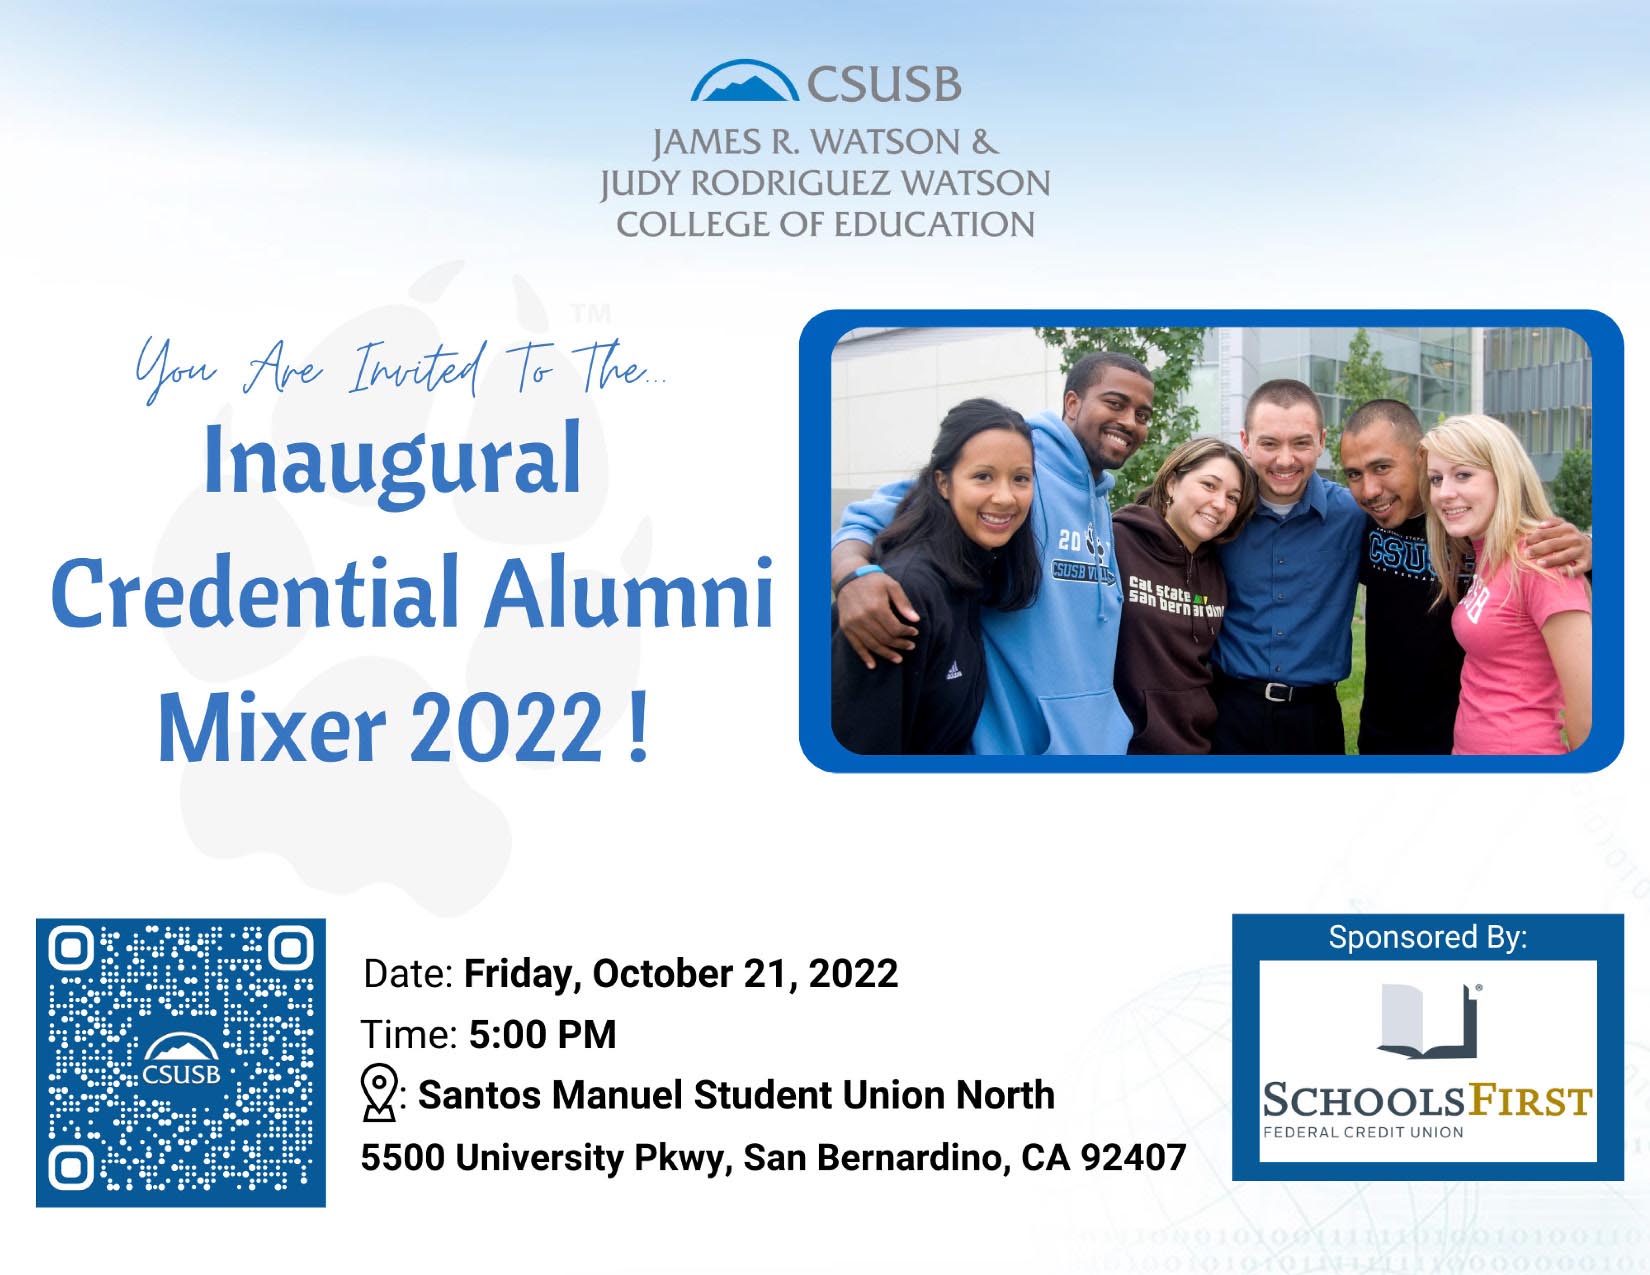 COE Credential Alumni Mixer event flyer.